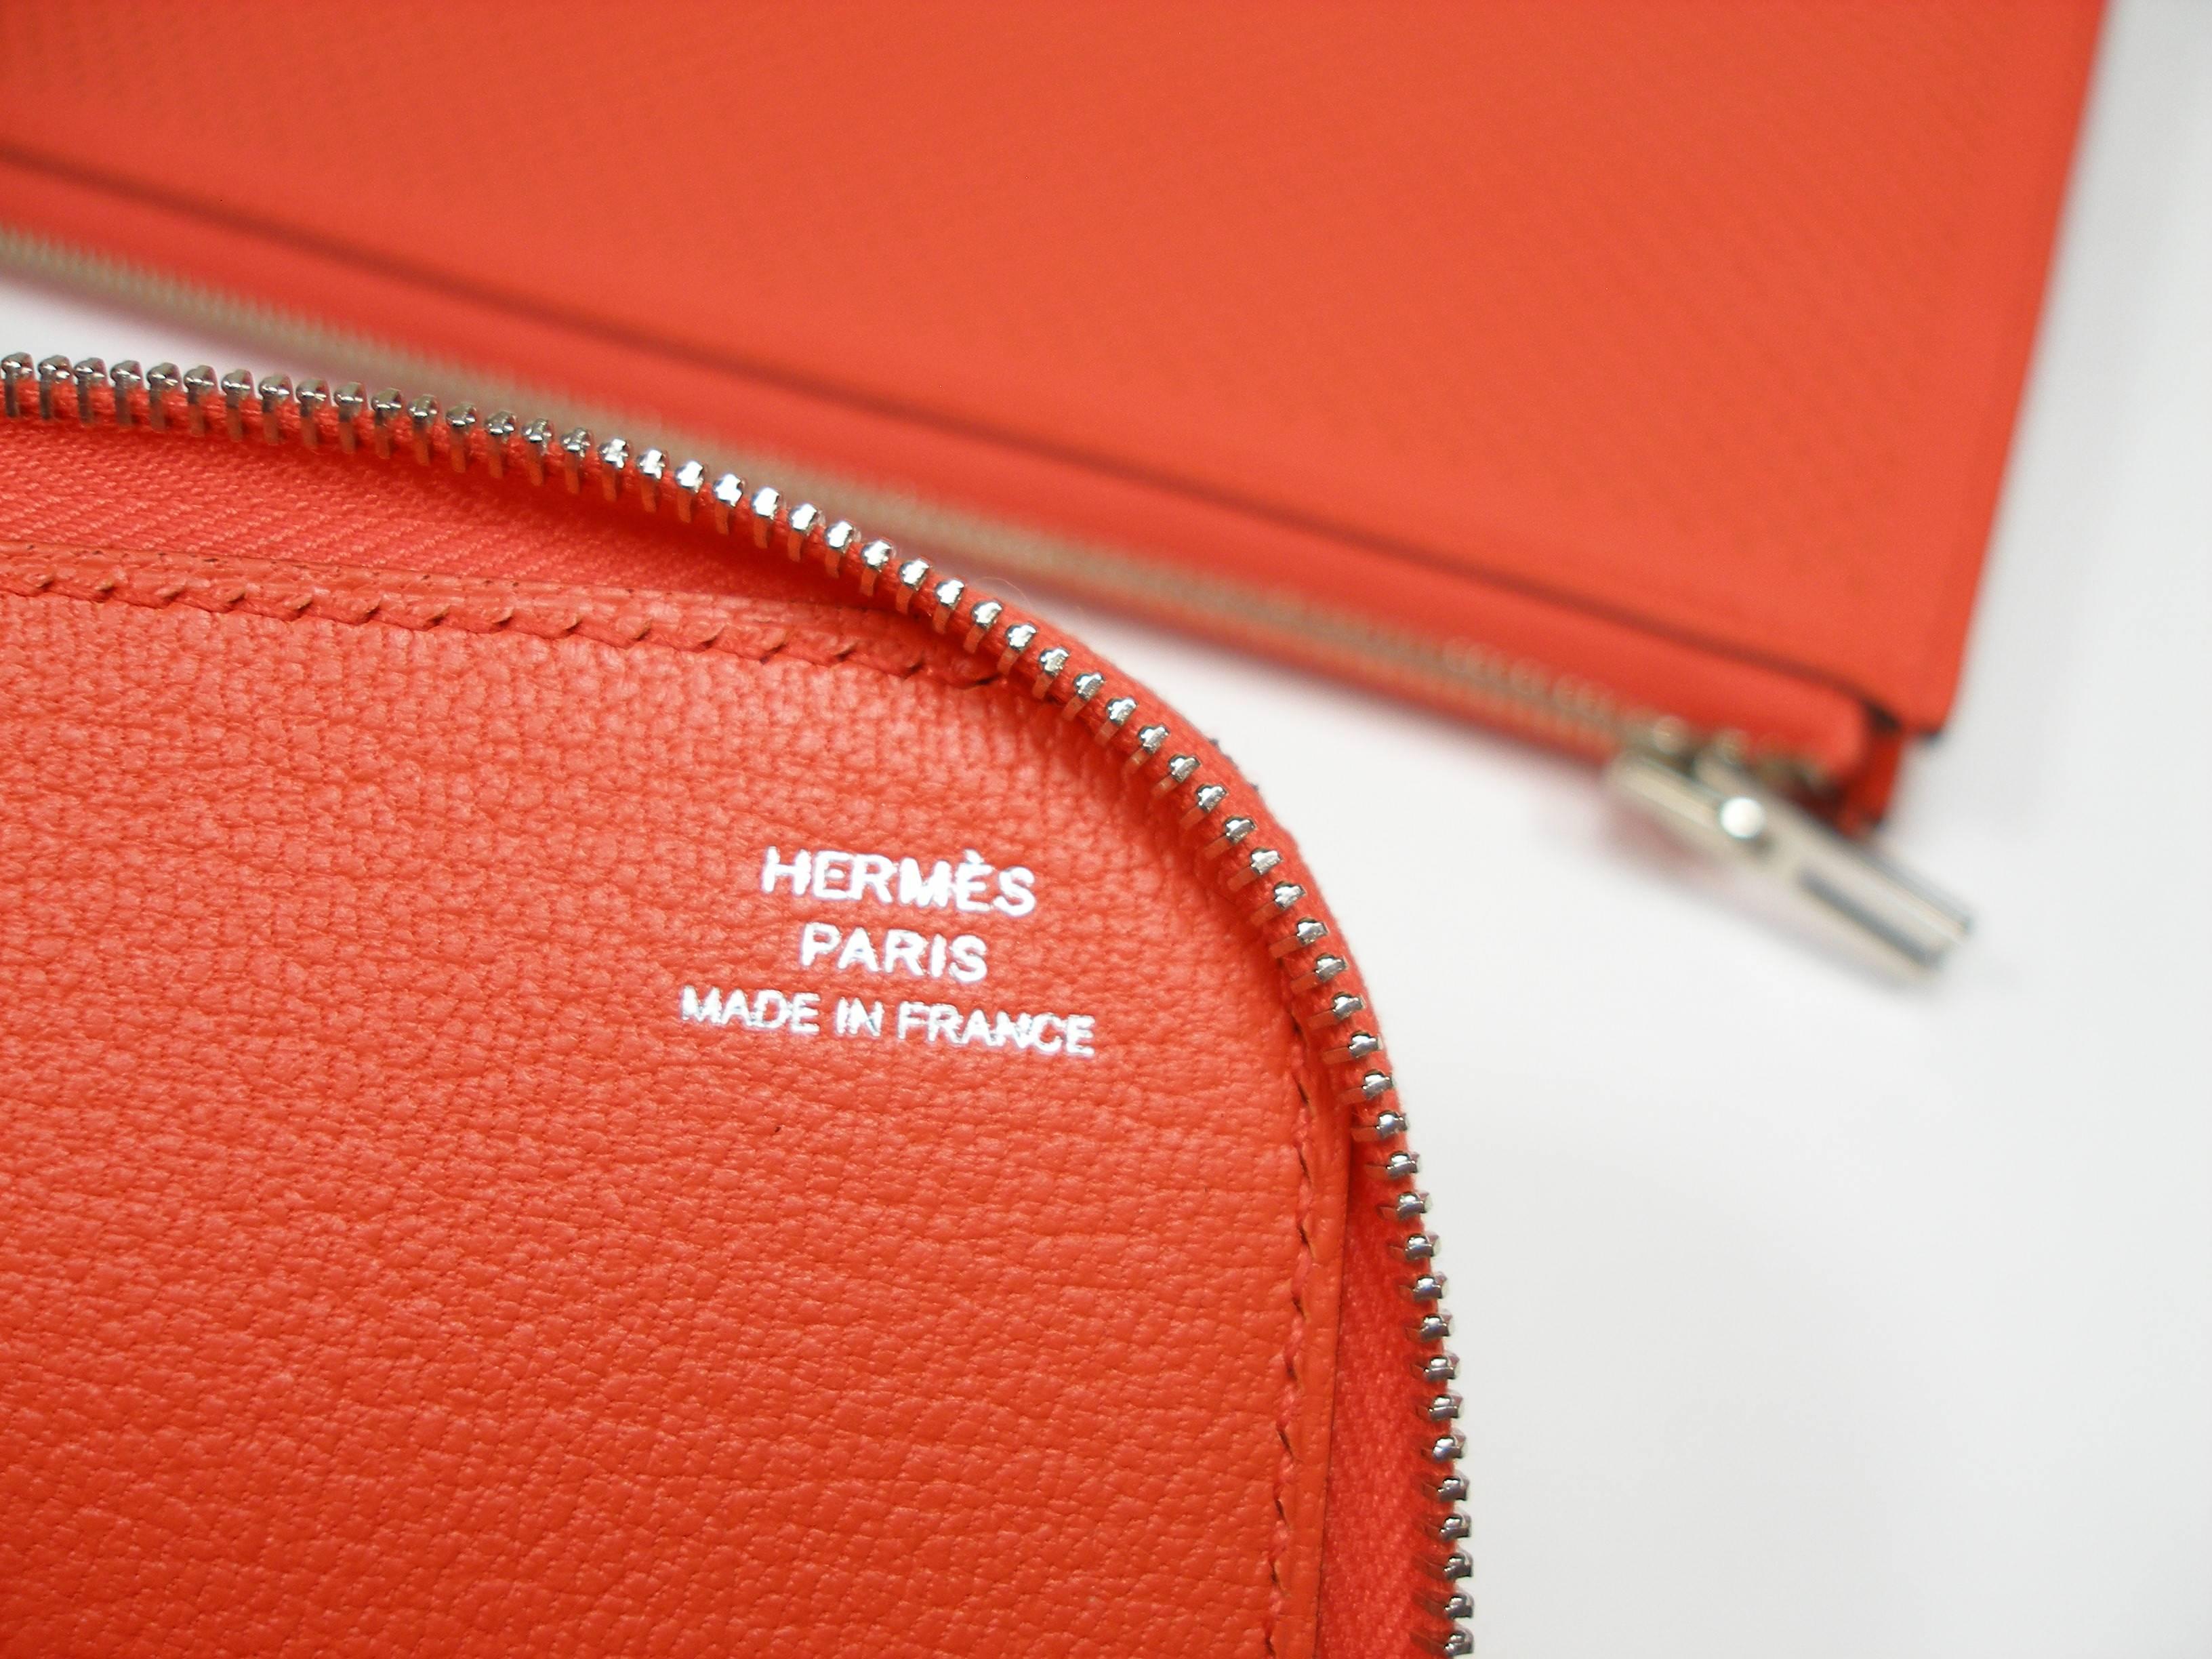 hermes remix voyage wallet